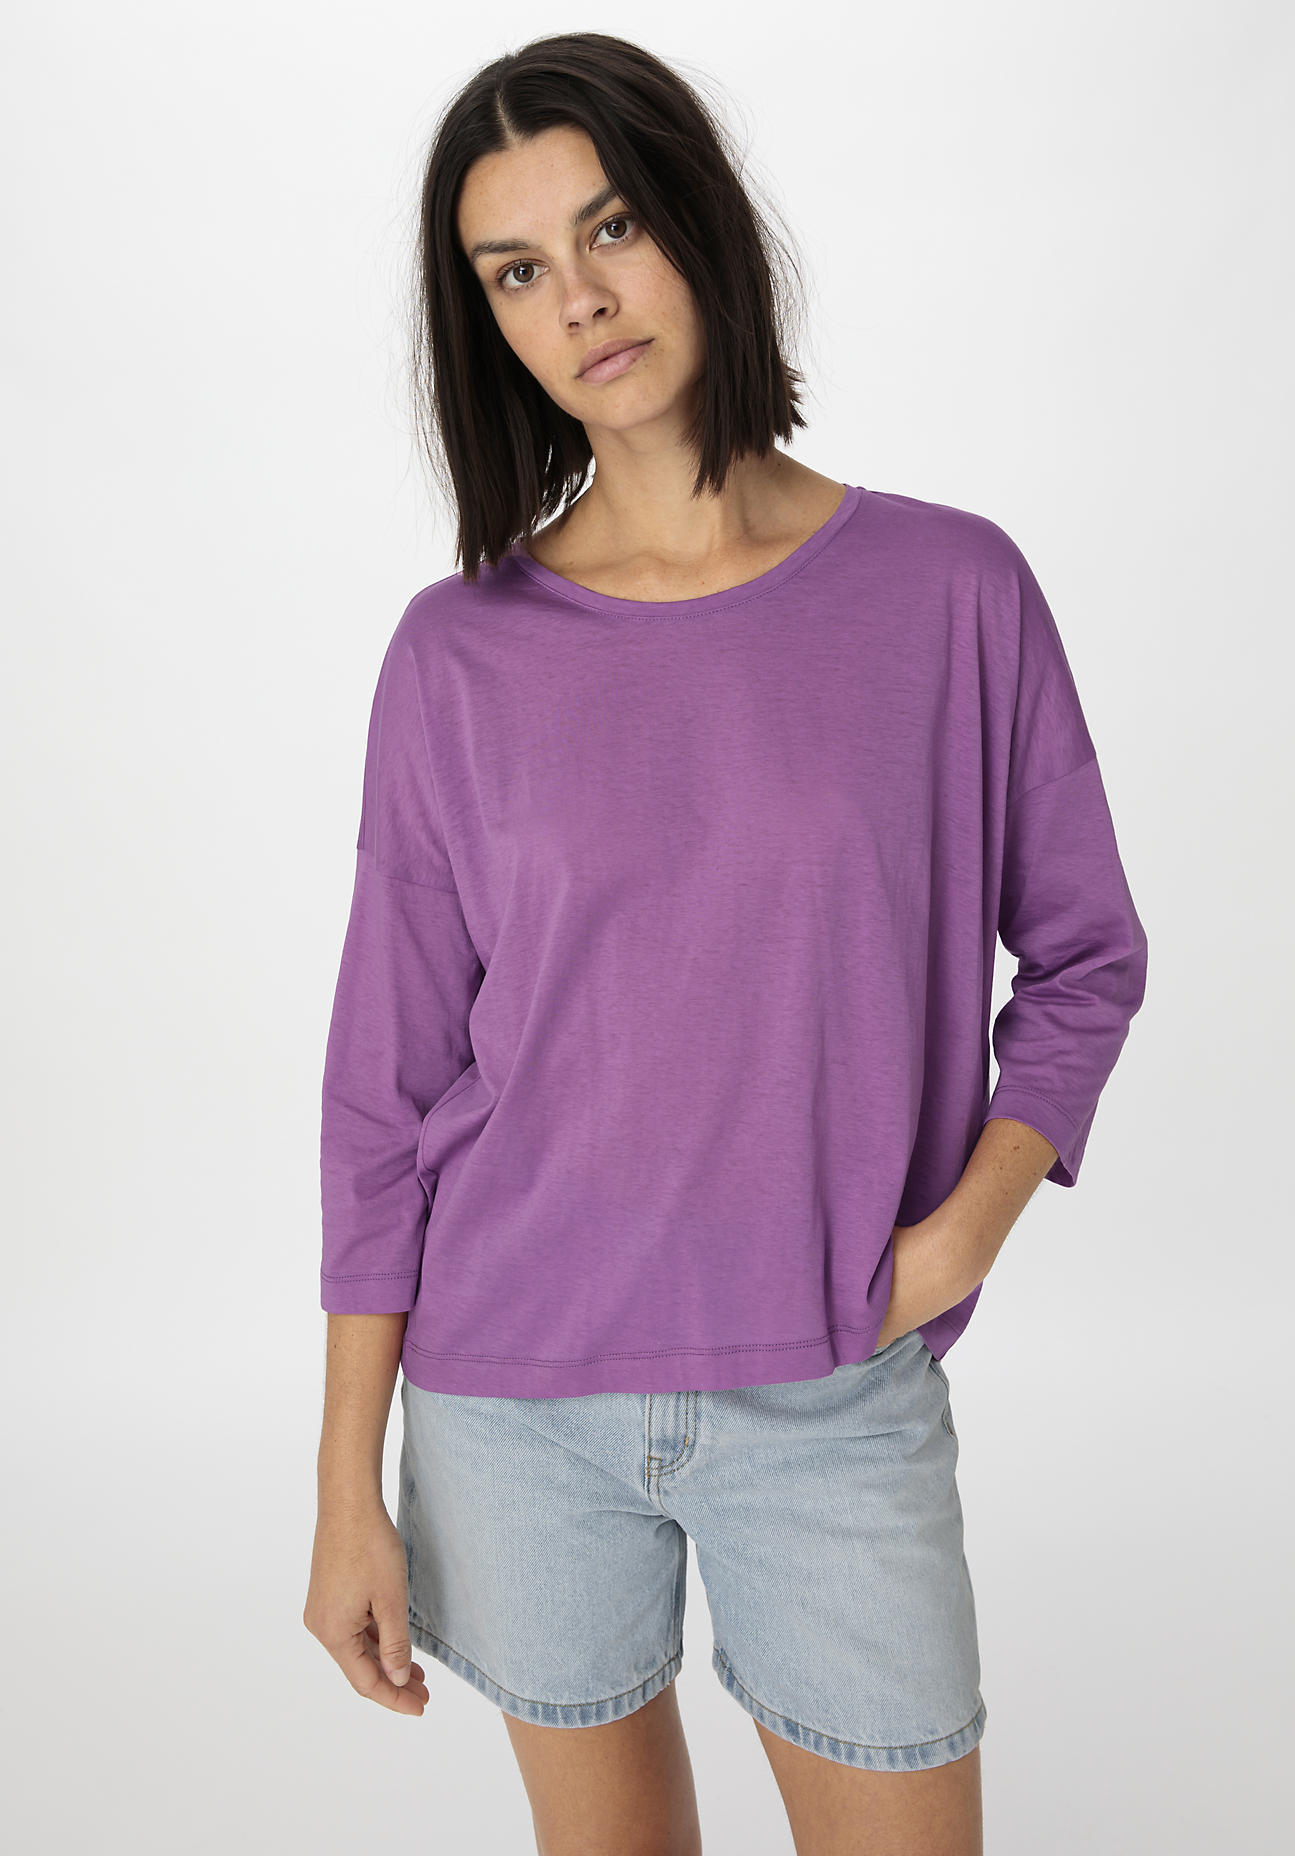 hessnatur Damen Premium Light Shirt Oversized aus Bio-Baumwolle - lila - Größe S